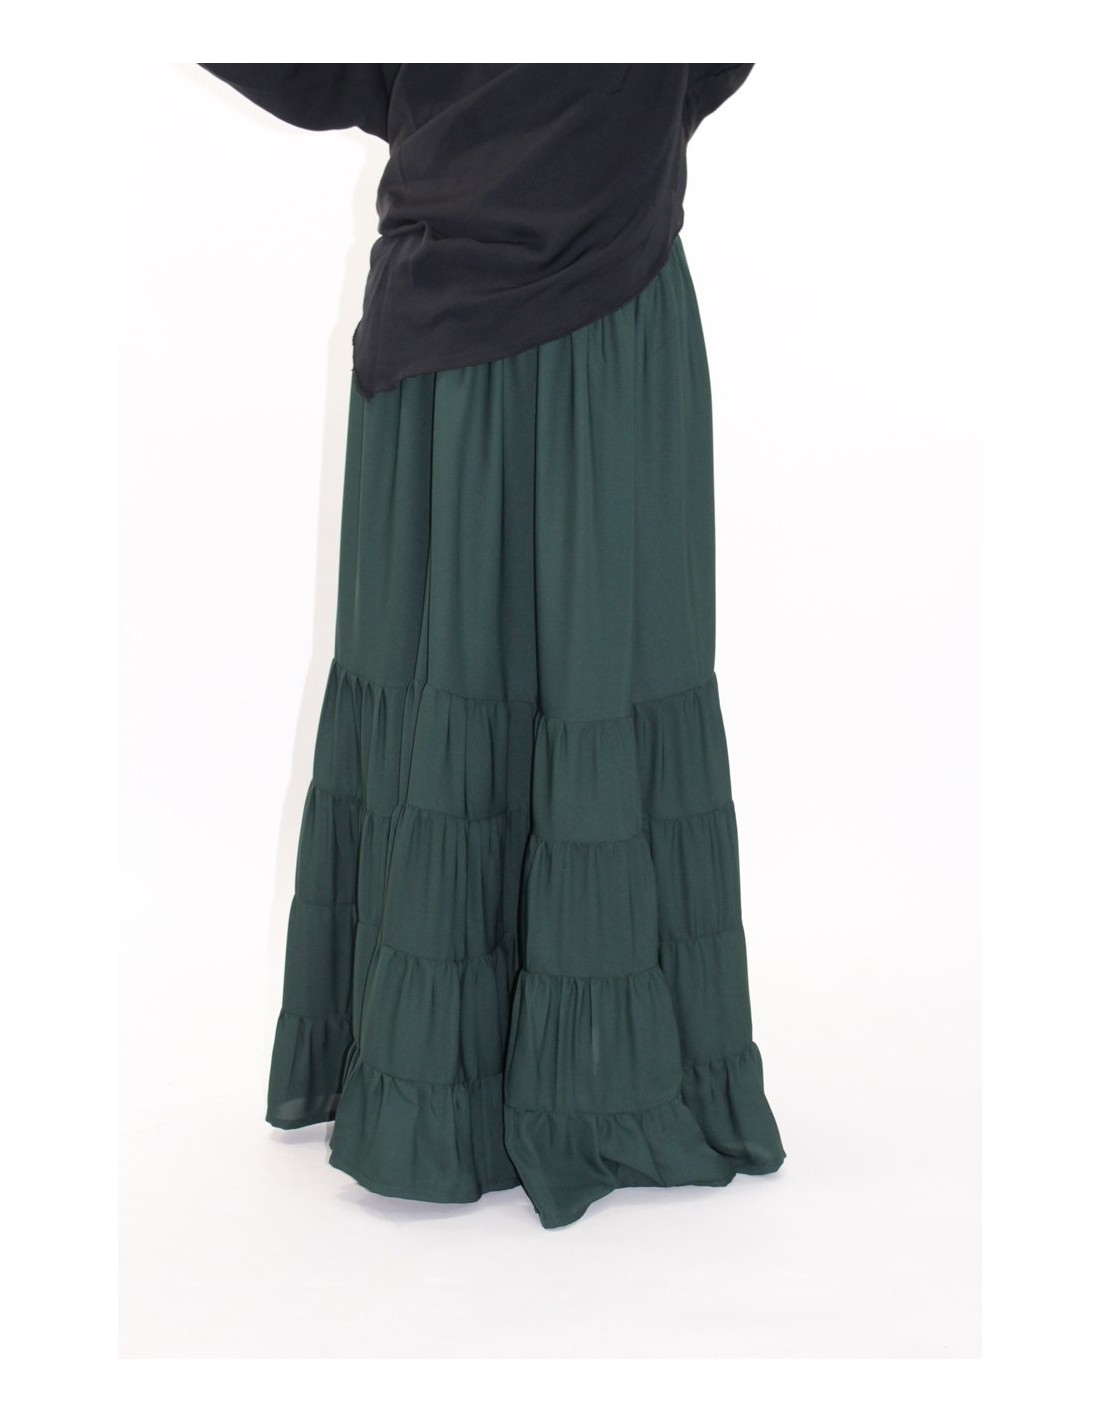 Skirt with nidha ruffle